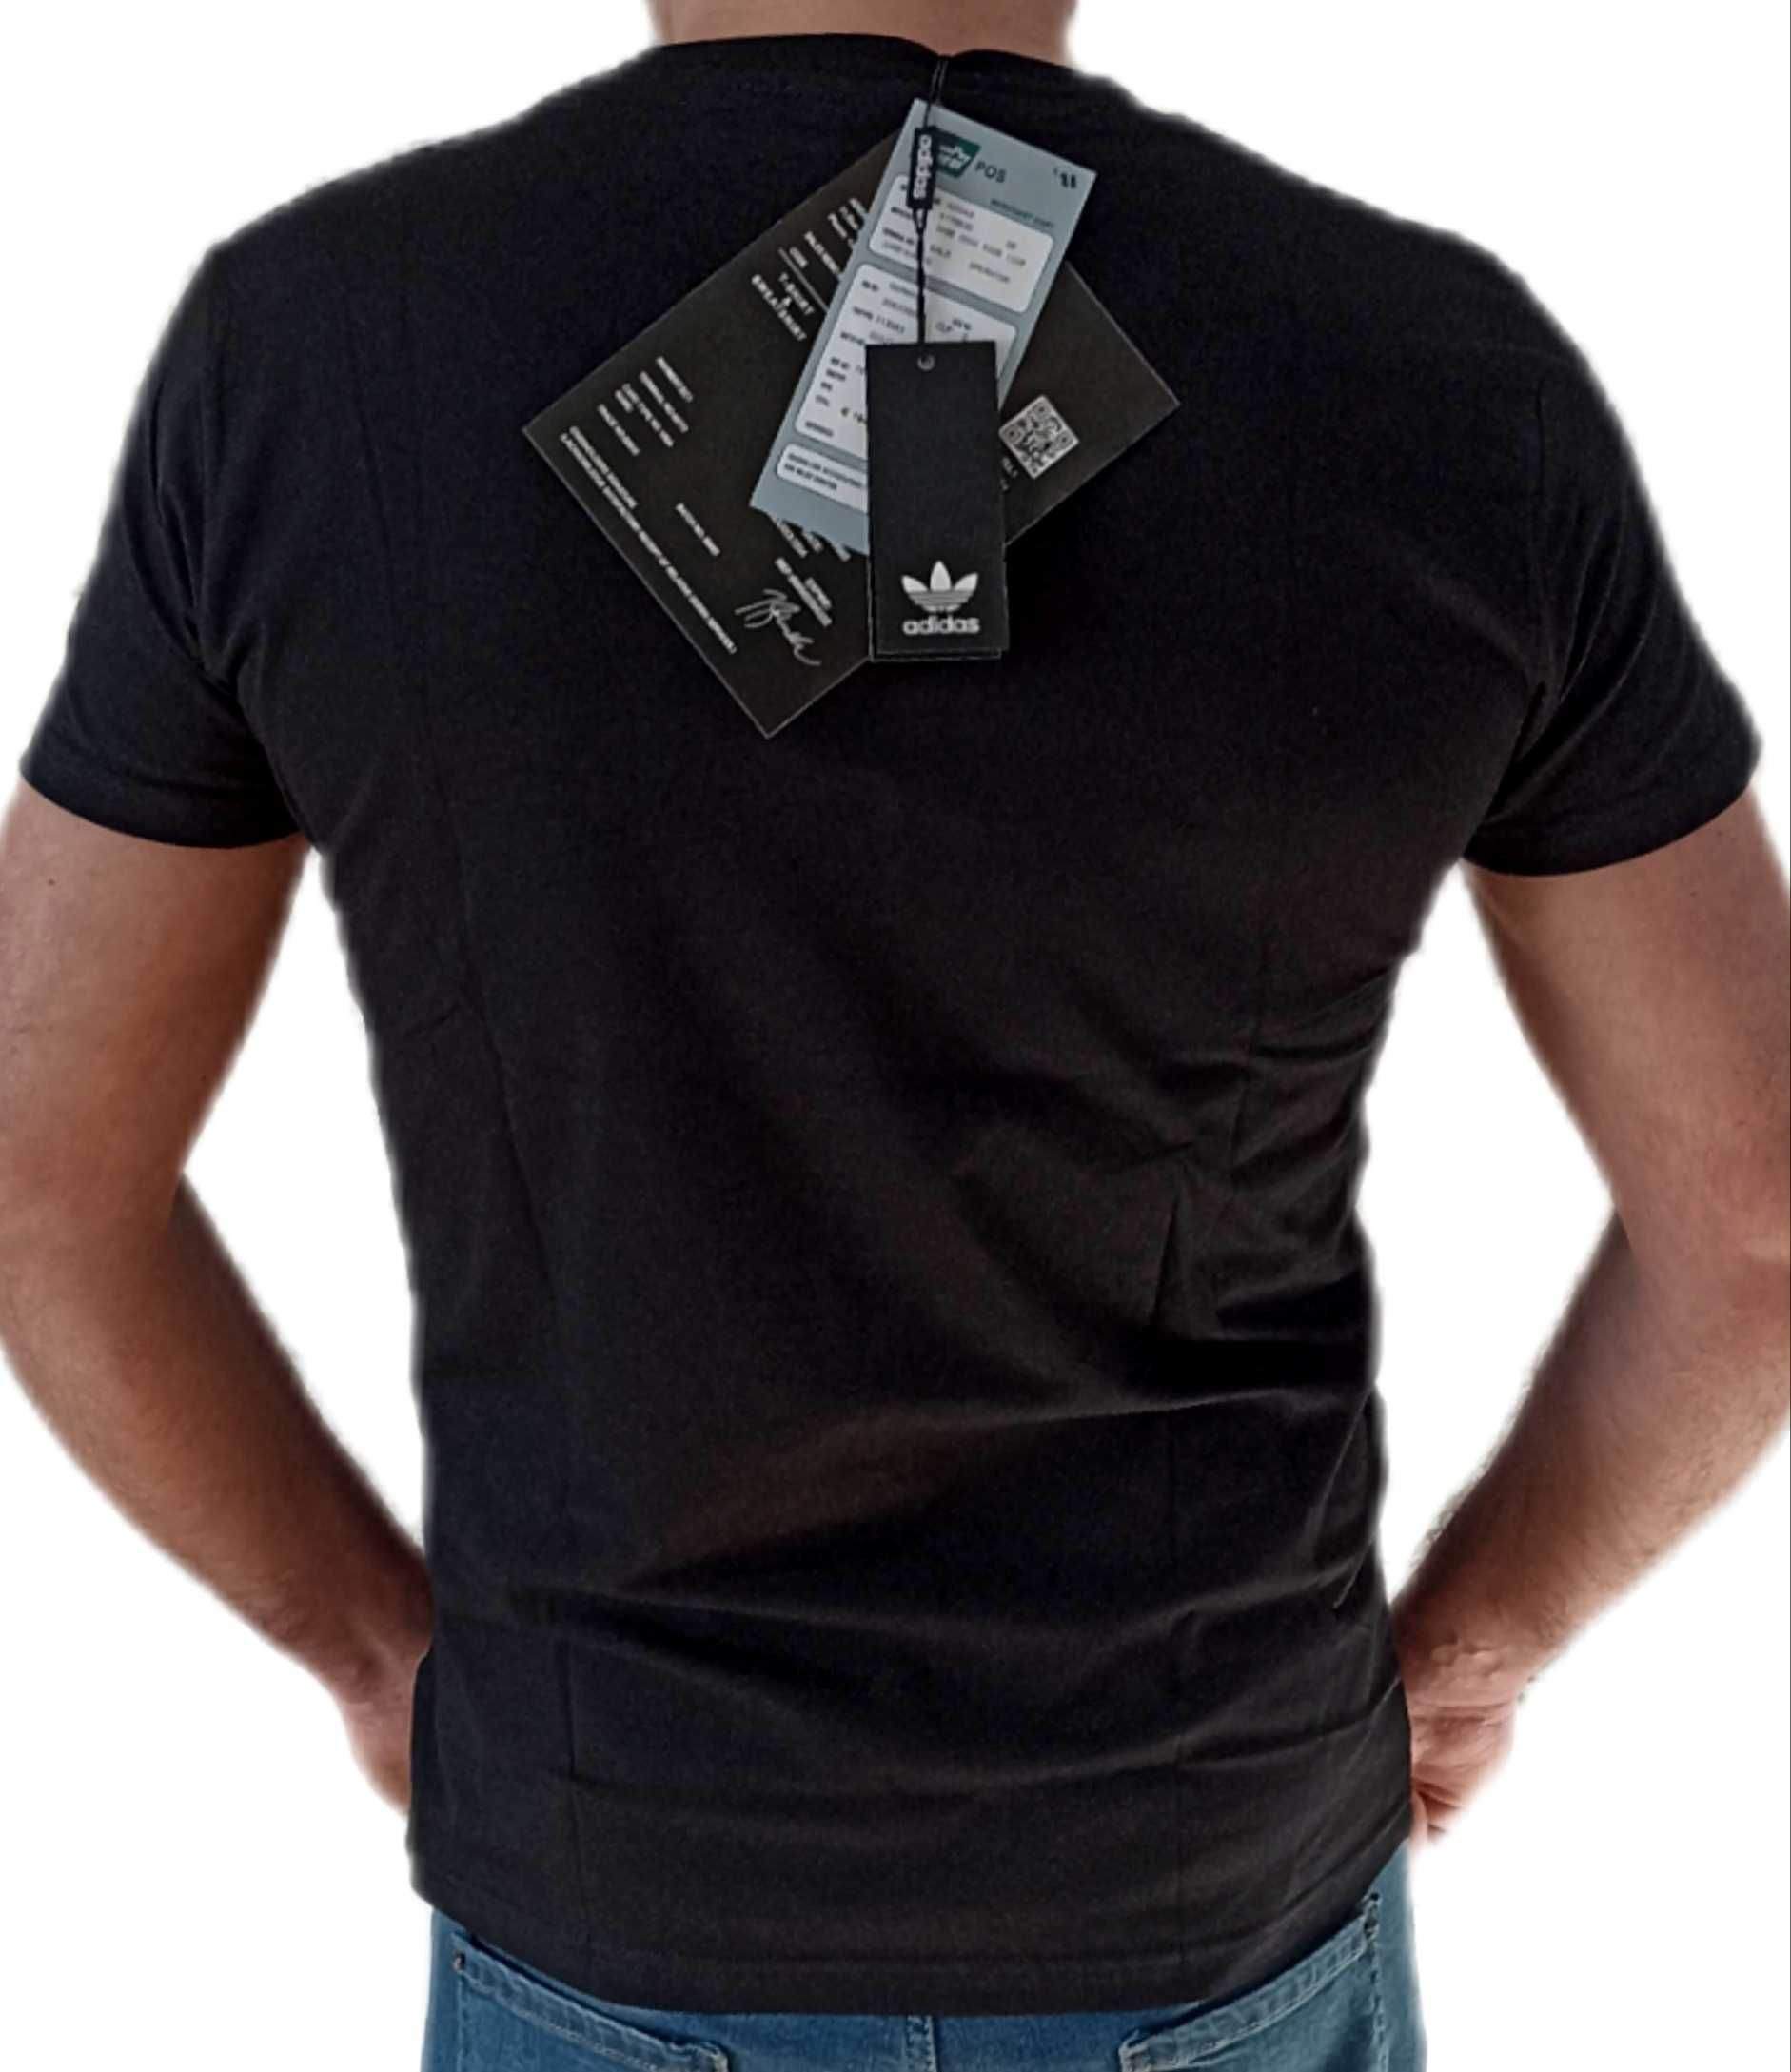 ADIDAS T-shirt Koszulka Czarna ROZ.SM,L,XL,XXL